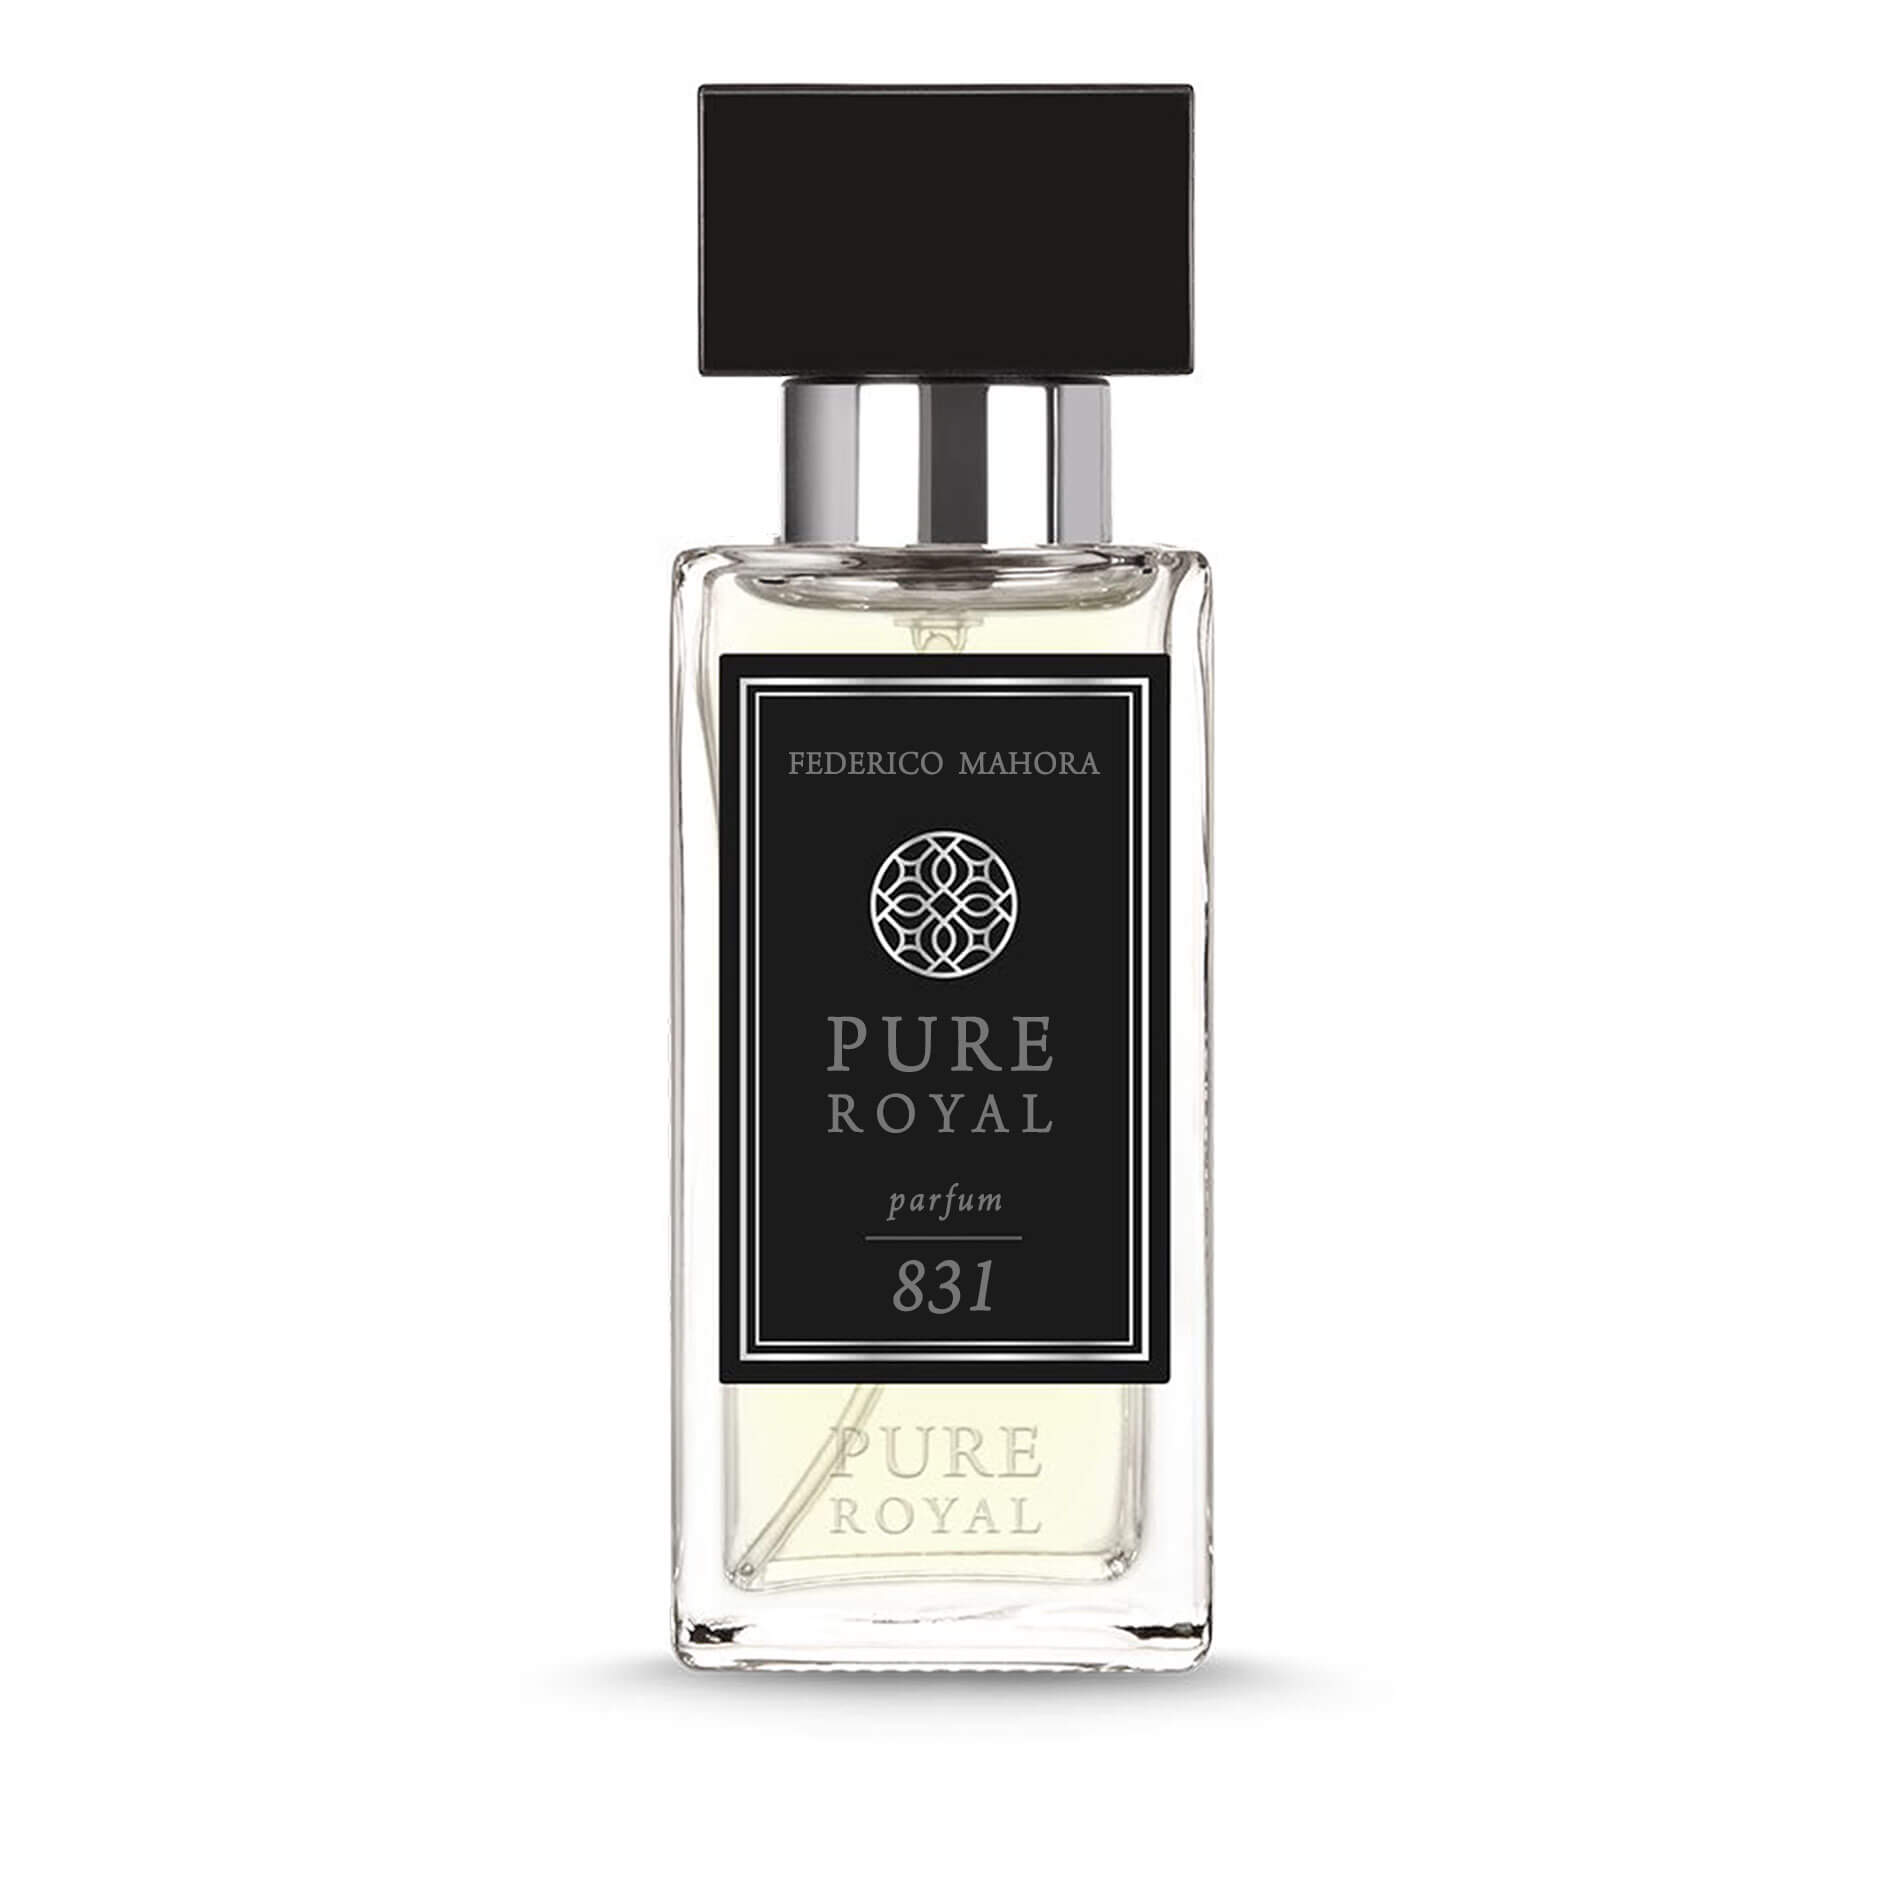 PURE ROYAL 831 Parfum by Federico Mahora